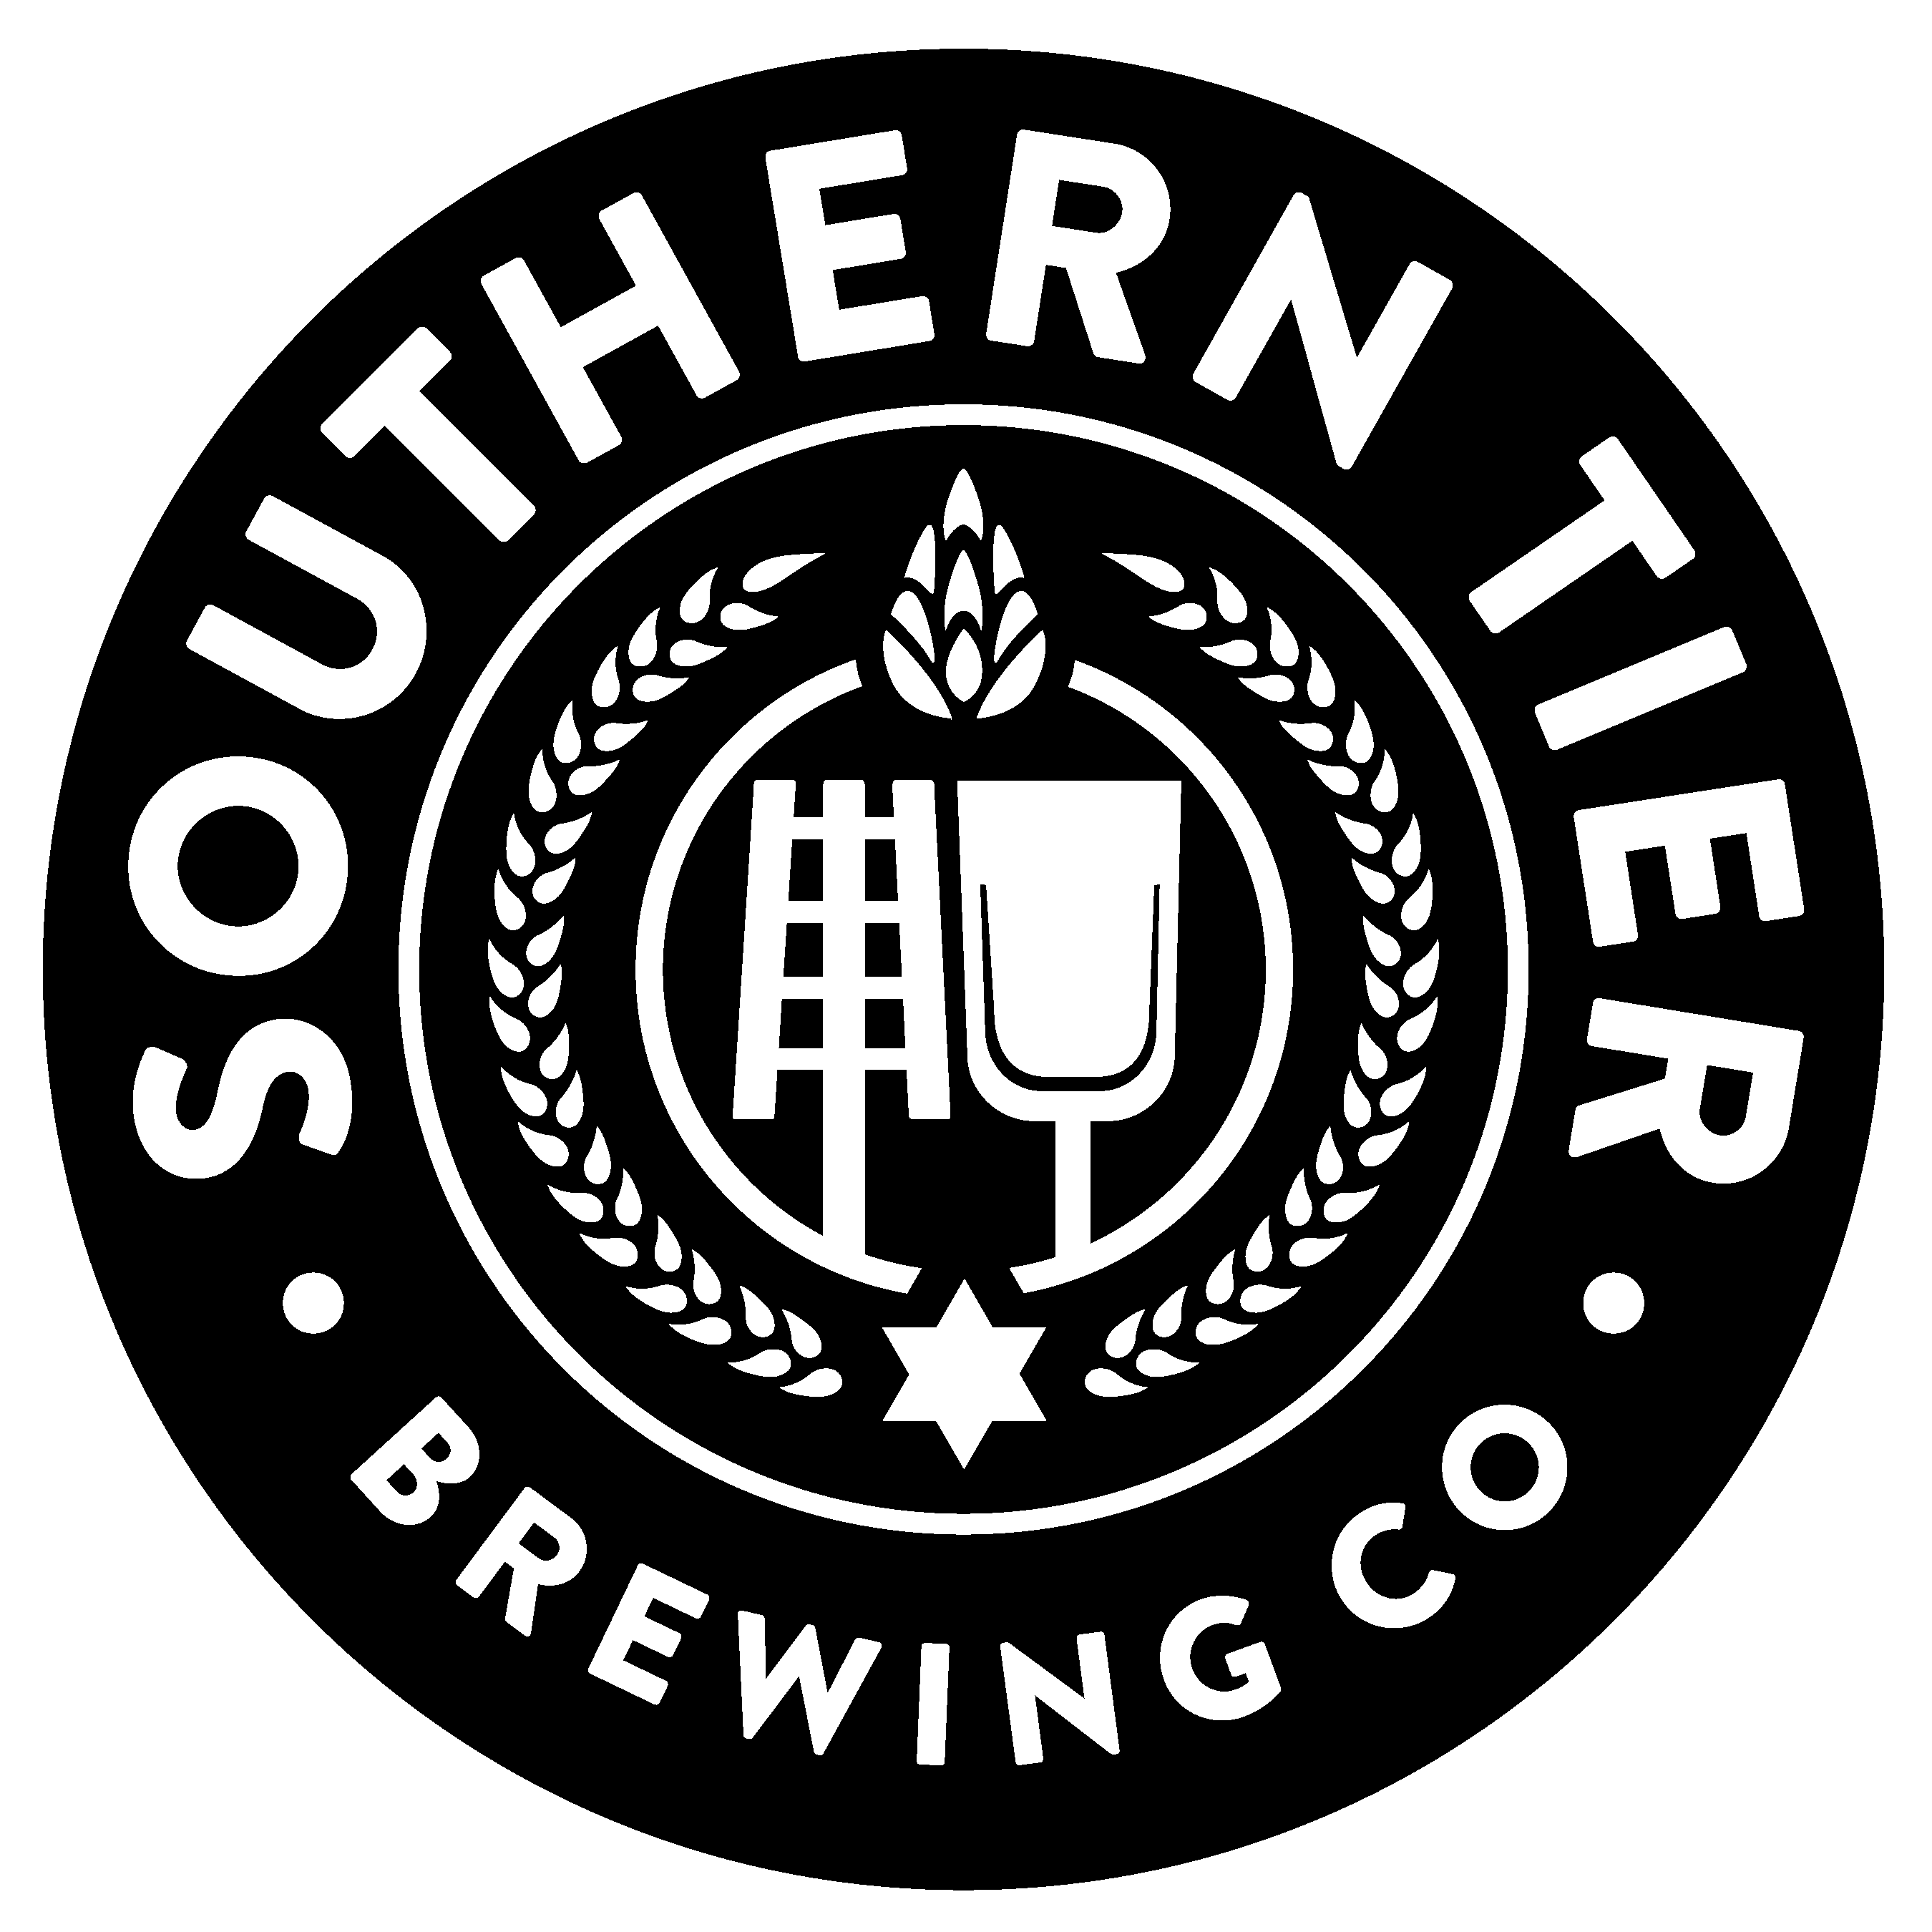 Southern Tier Brewing Company - logo - Buffalocal